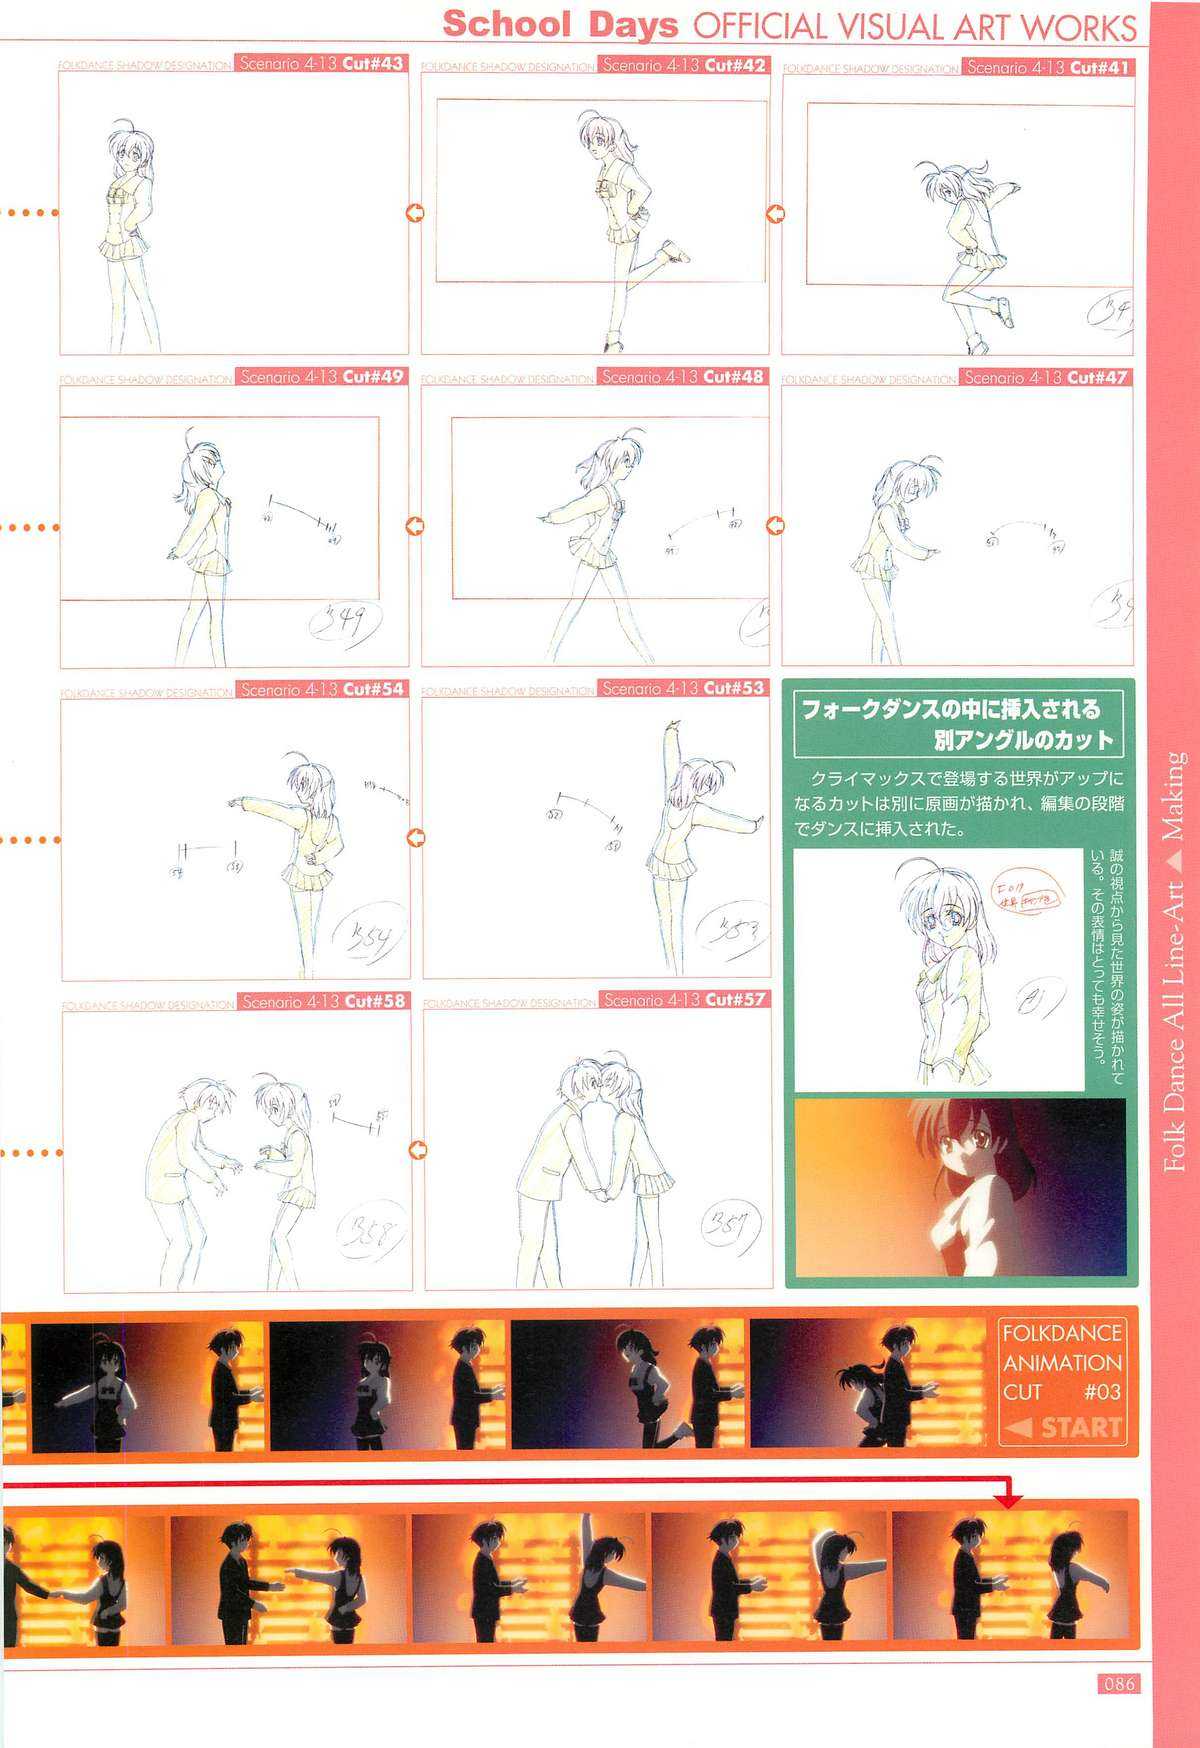 School Days Official Visual Art Works School Days 公式ビジュアル・アートワークス